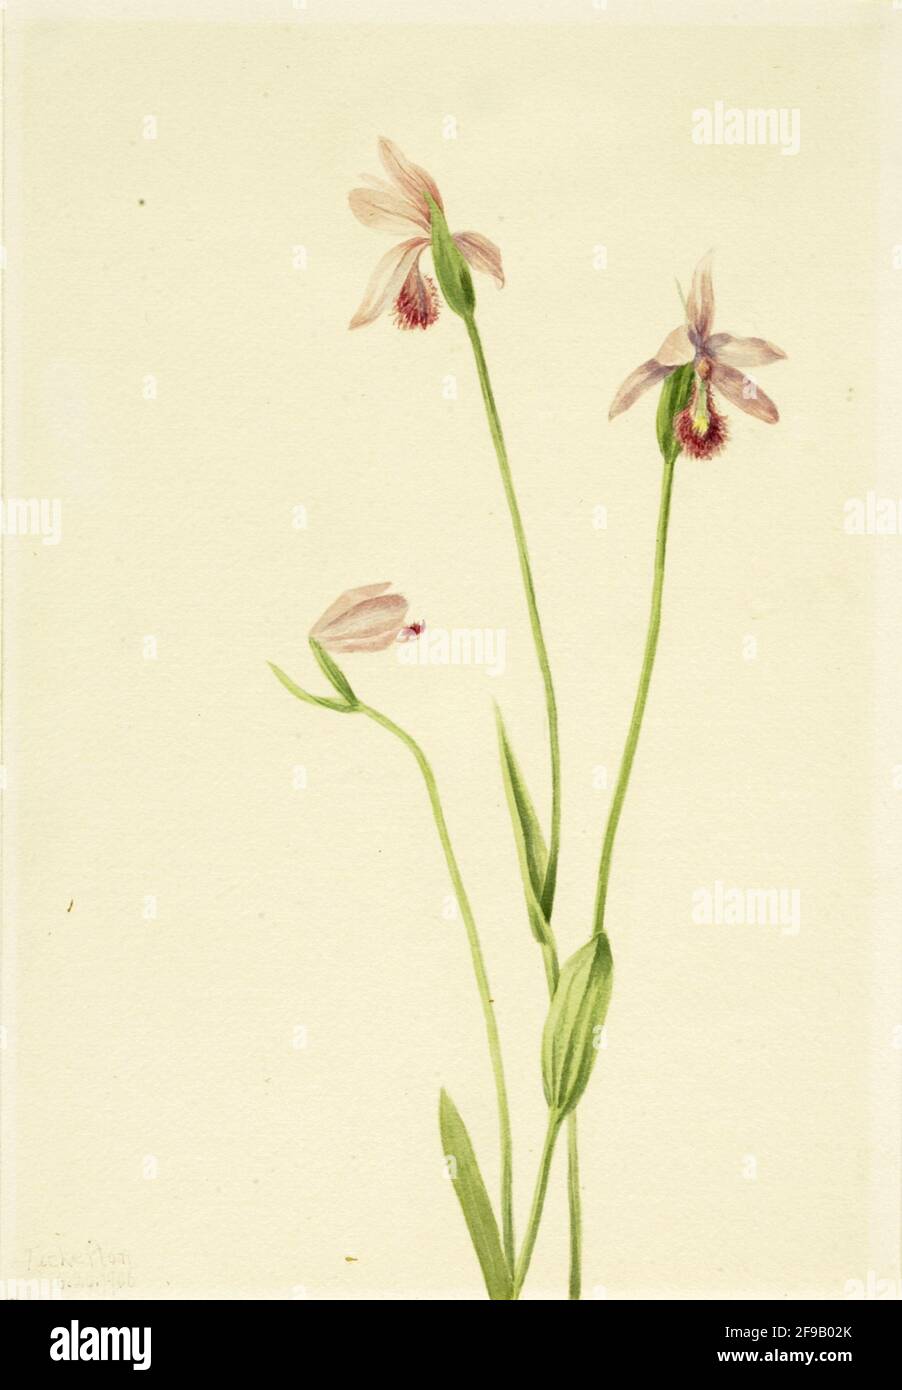 Rose Pogonia (Pogonia ophioglossoides), 1906. Stock Photo